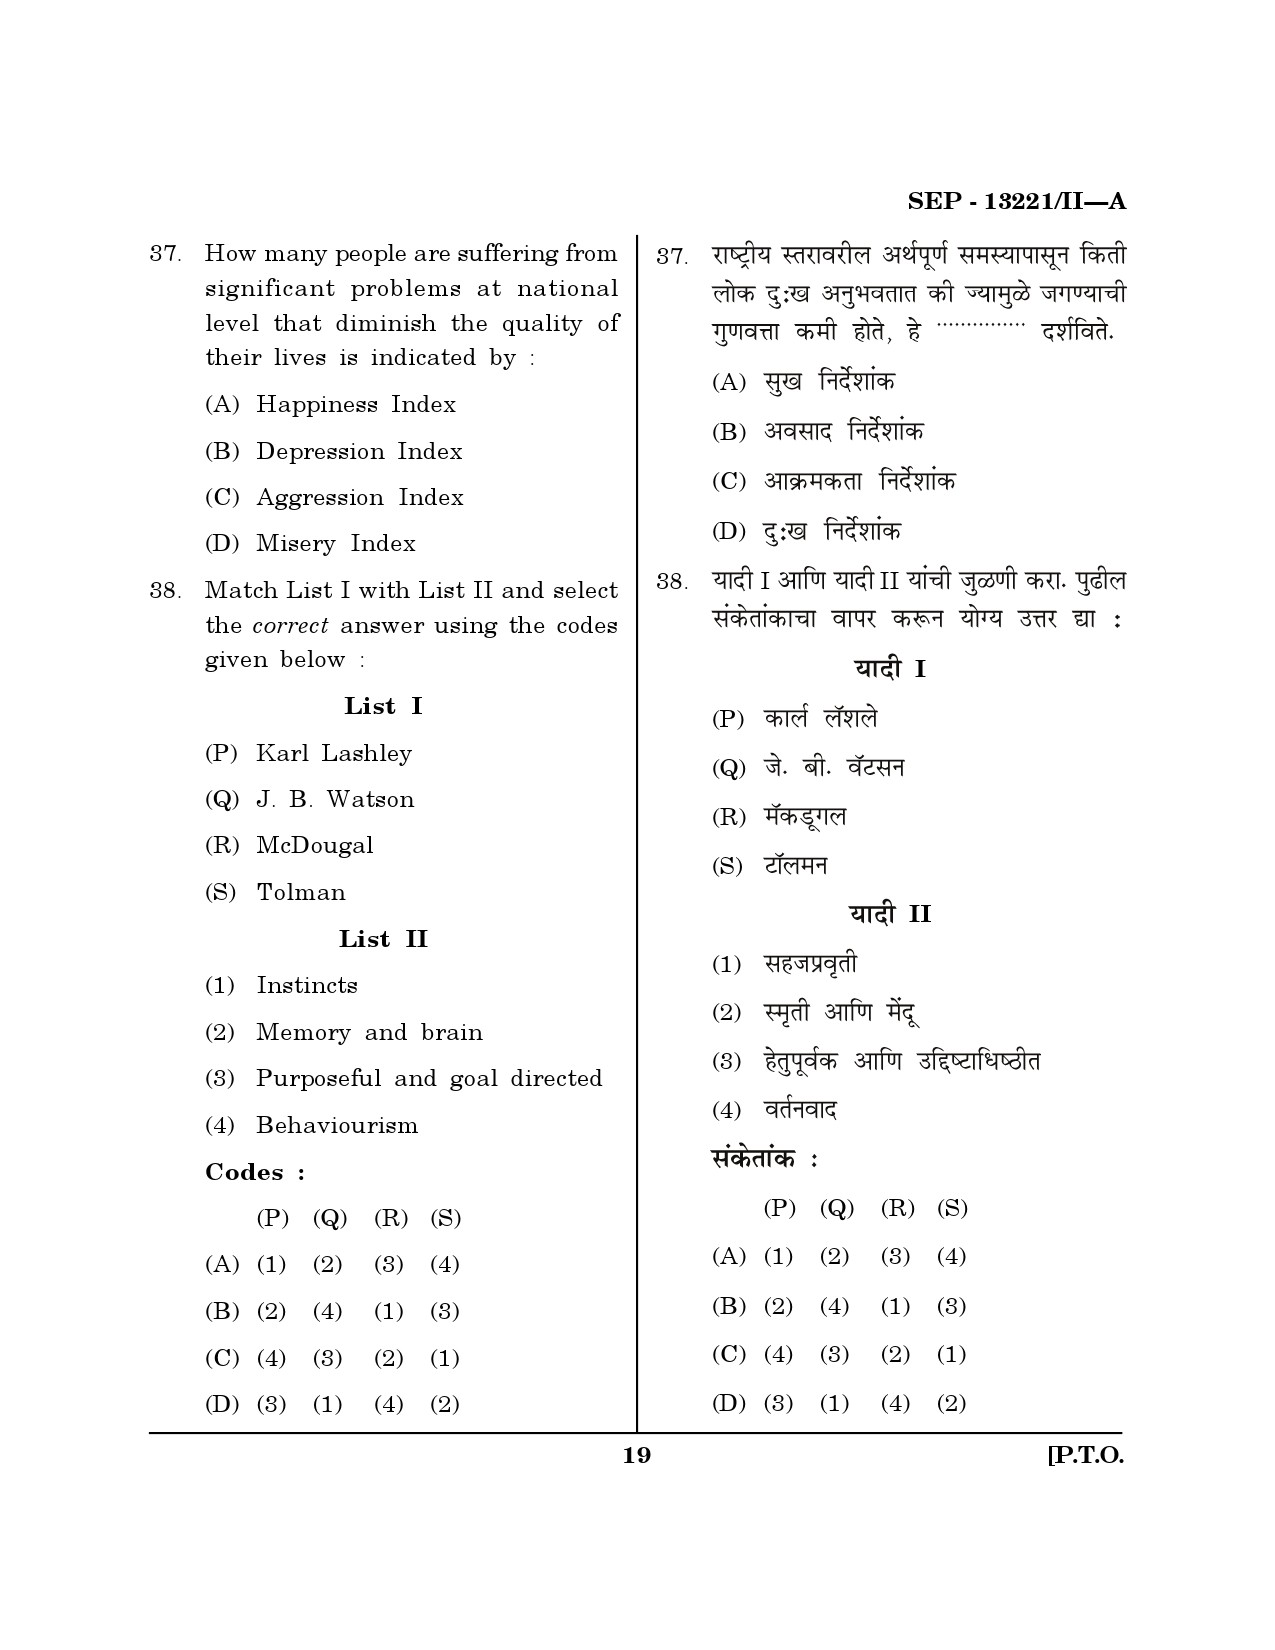 Maharashtra SET Psychology Exam Question Paper September 2021 18